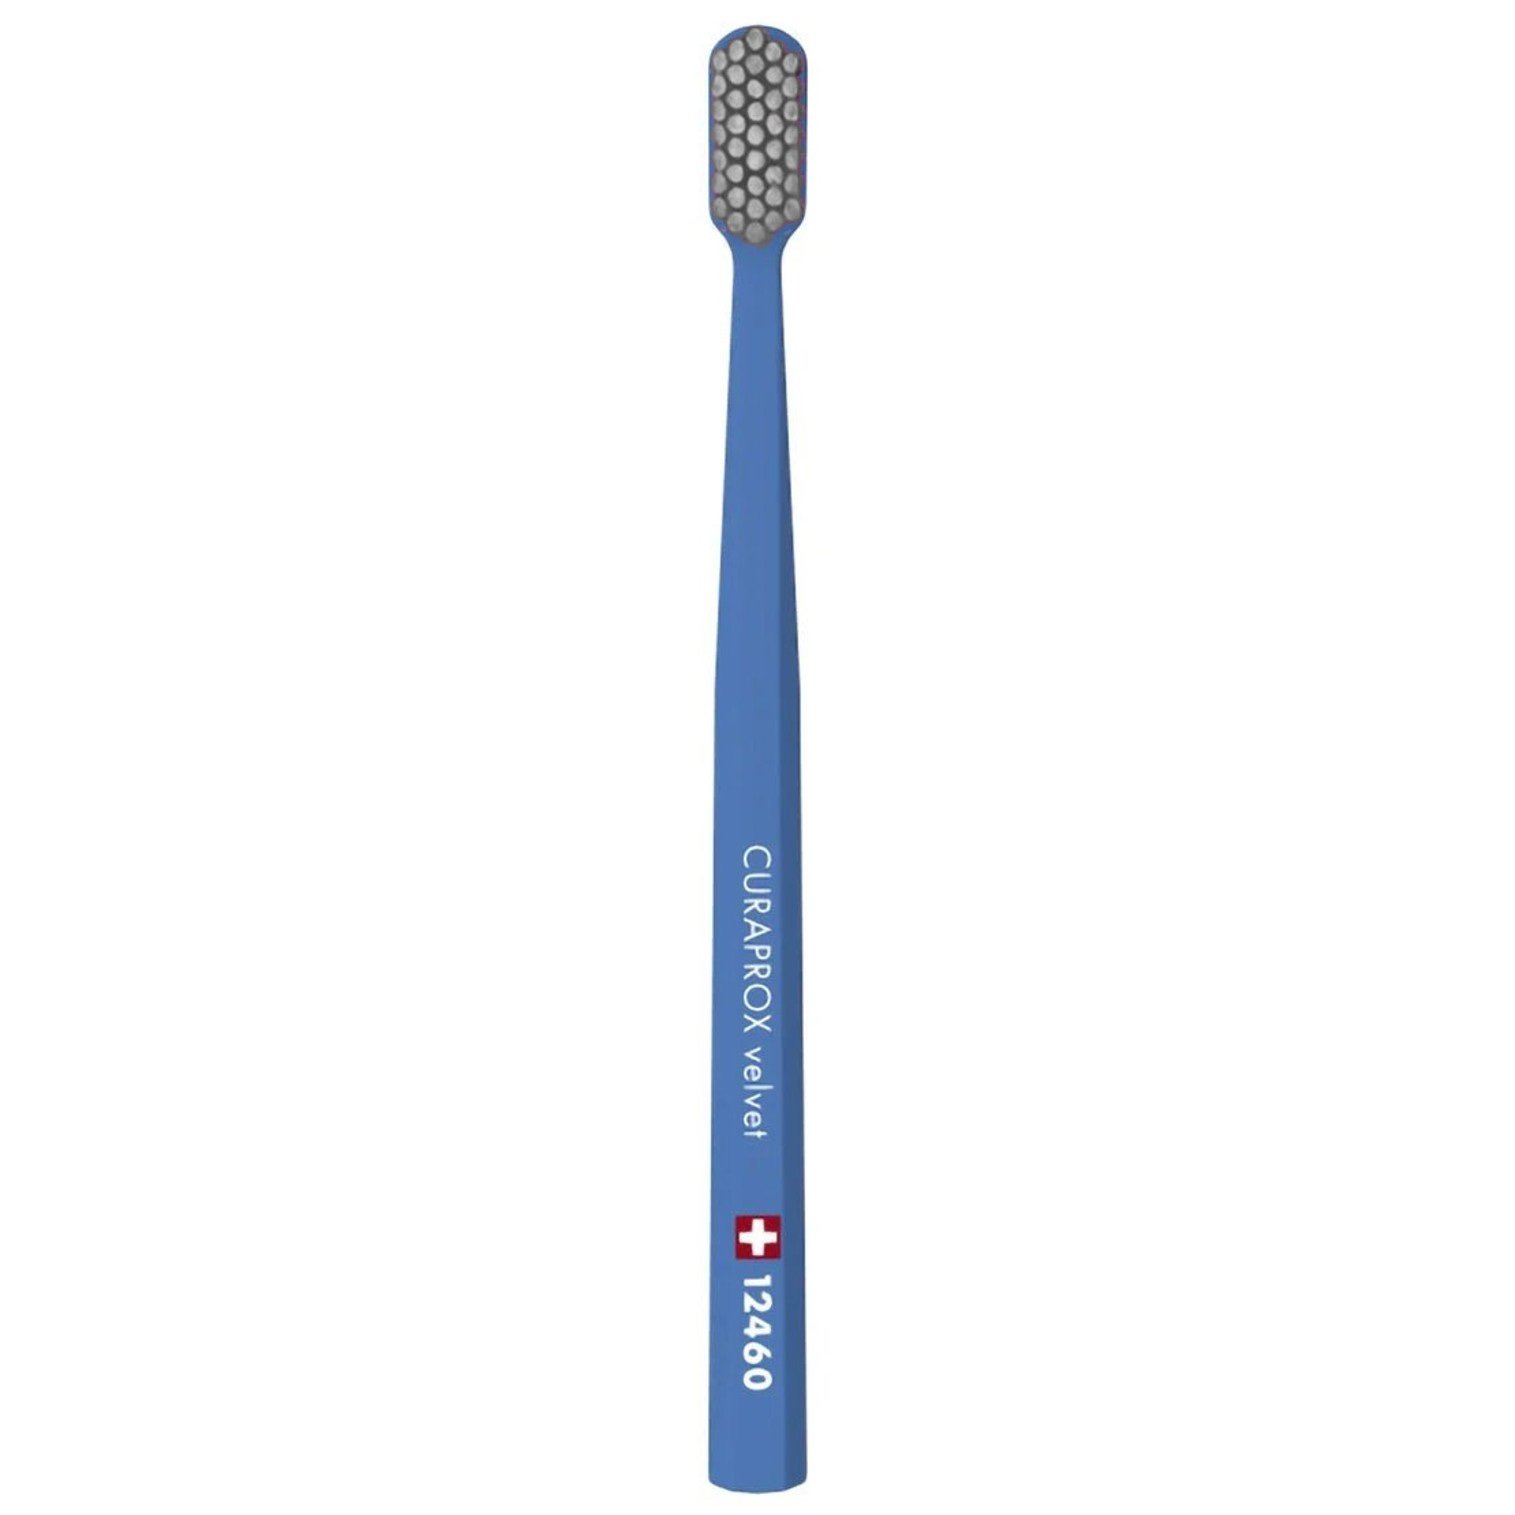 Curaprox CS 12460 Velvet Toothbrush Οδοντόβουρτσα με Εξαιρετικά Απαλές & Πυκνές Ίνες Curen για Πολύ Ευαίσθητα Δόντια 1 Τεμάχιο – Σκούρο Μπλε / Γκρι